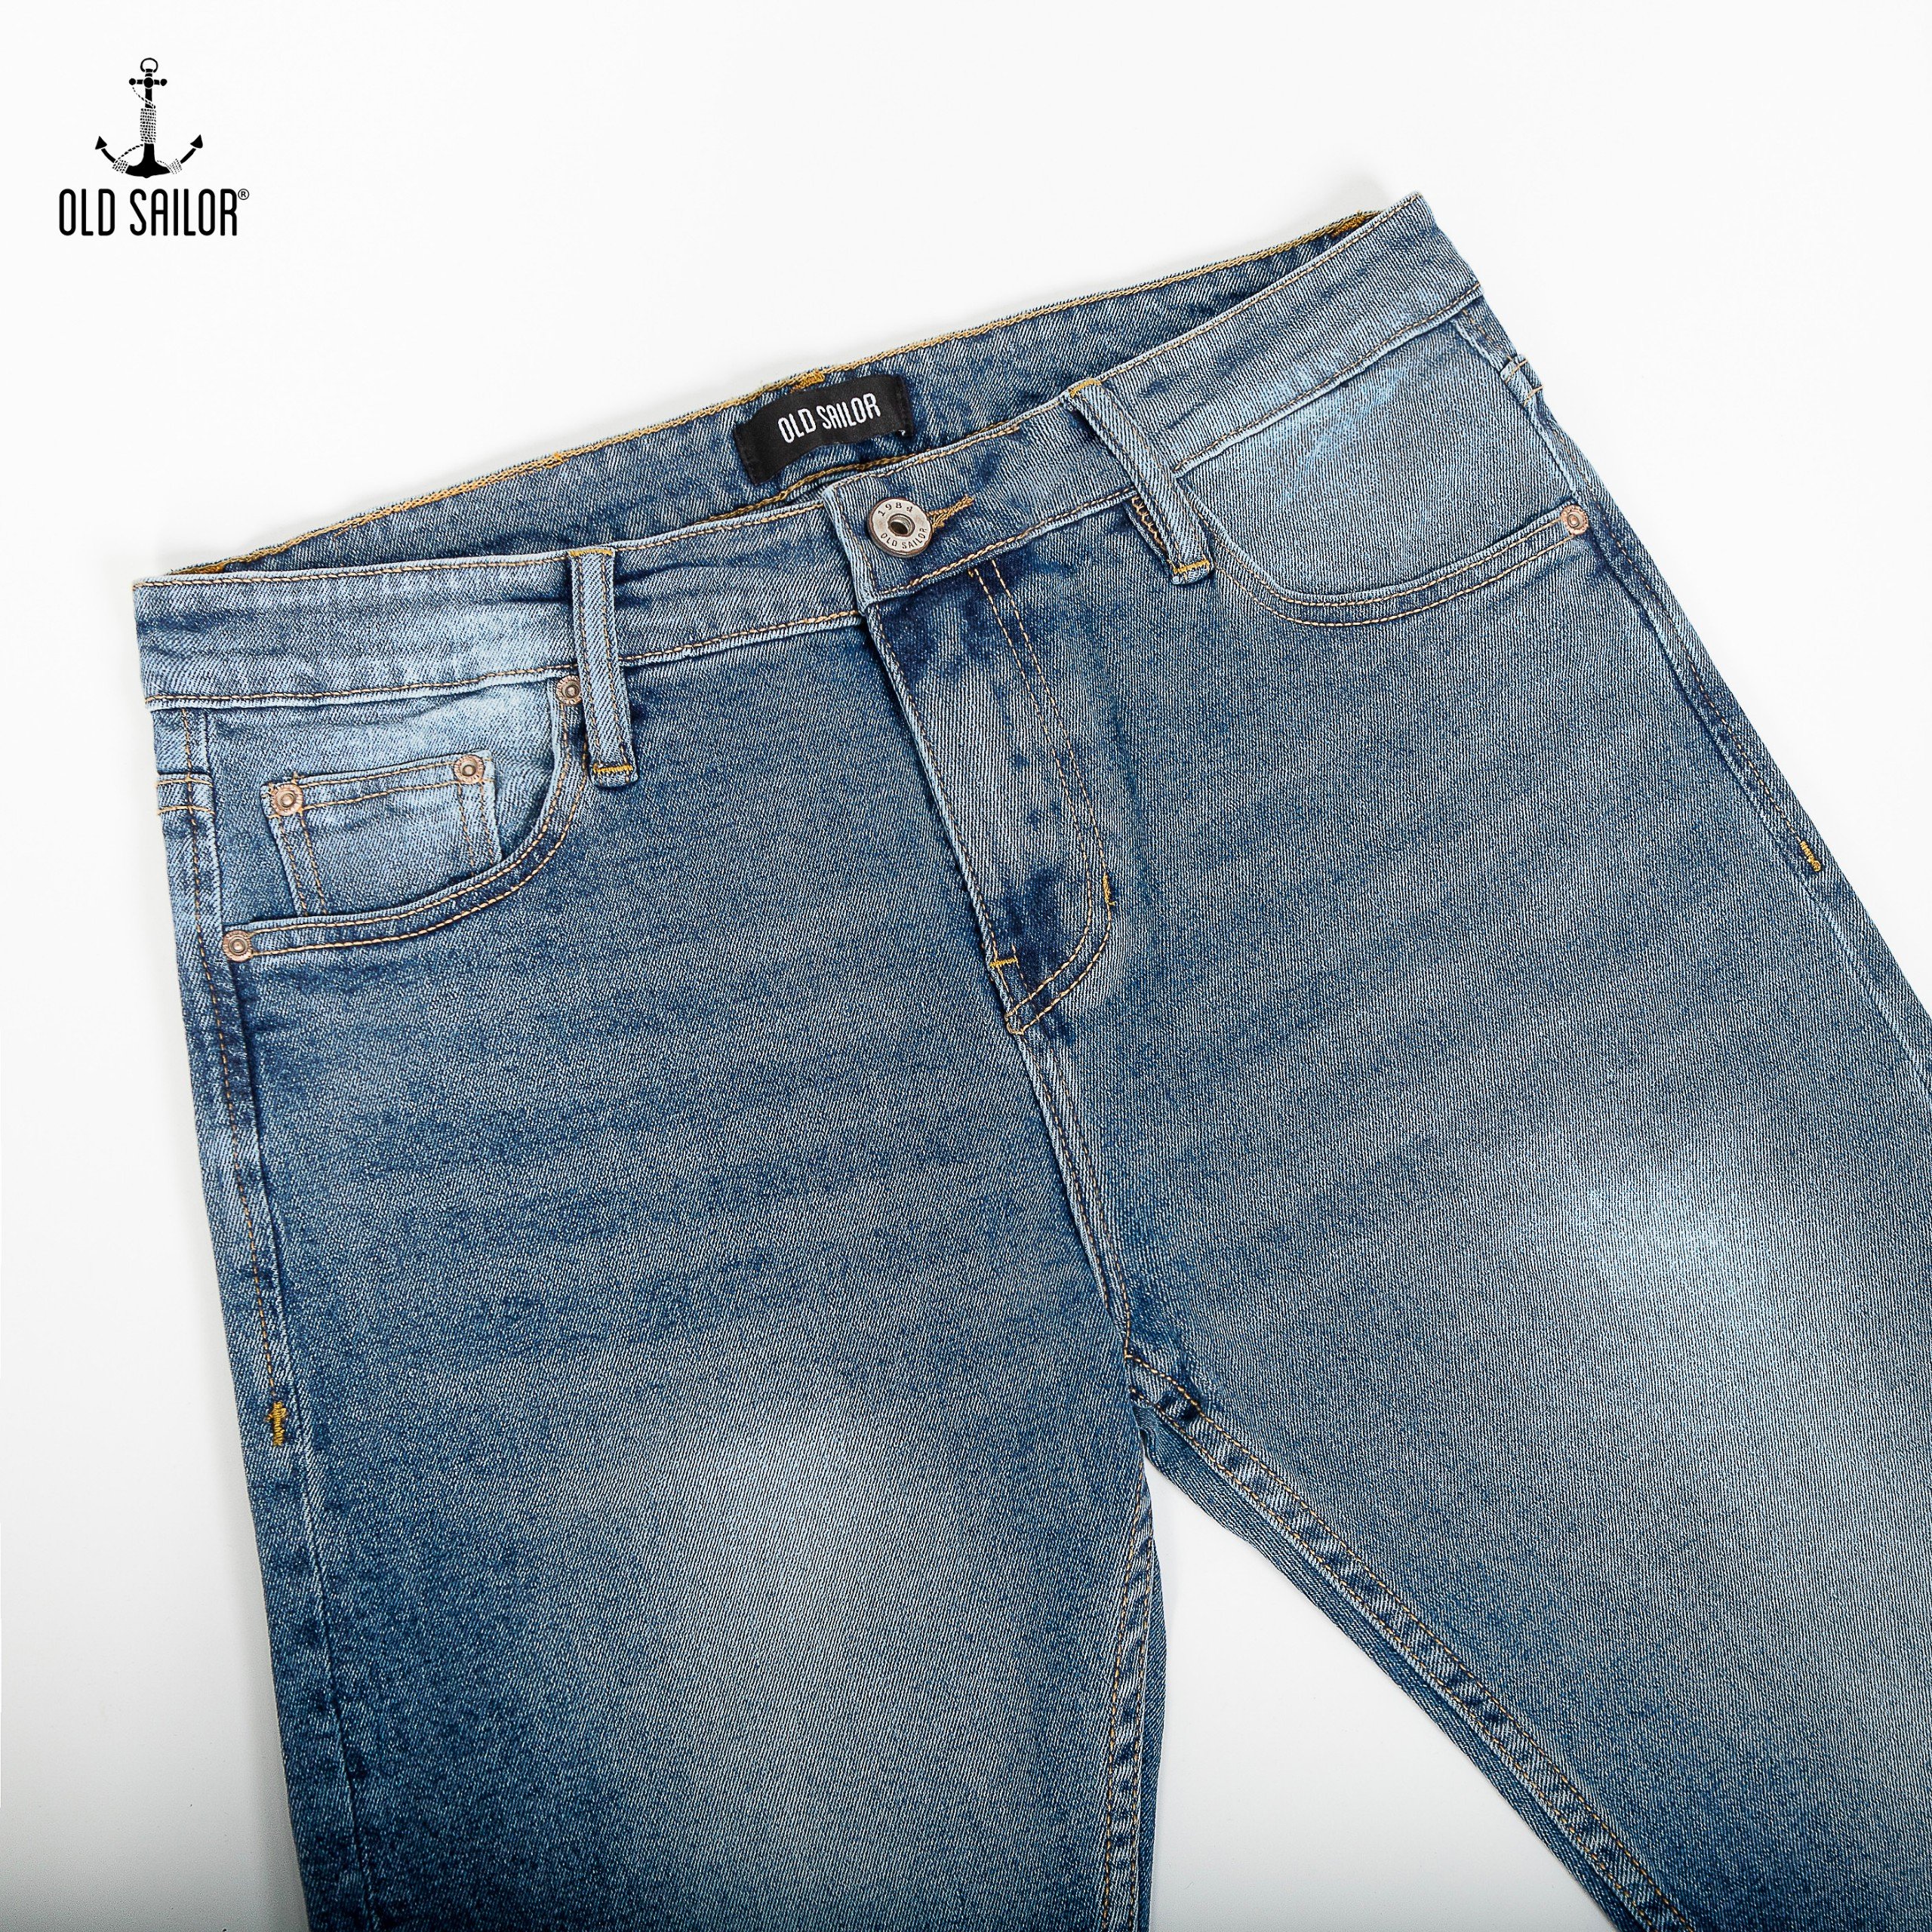 Quần jeans nam form slimfit premium Old Sailor - 6826 - Big size upto 42